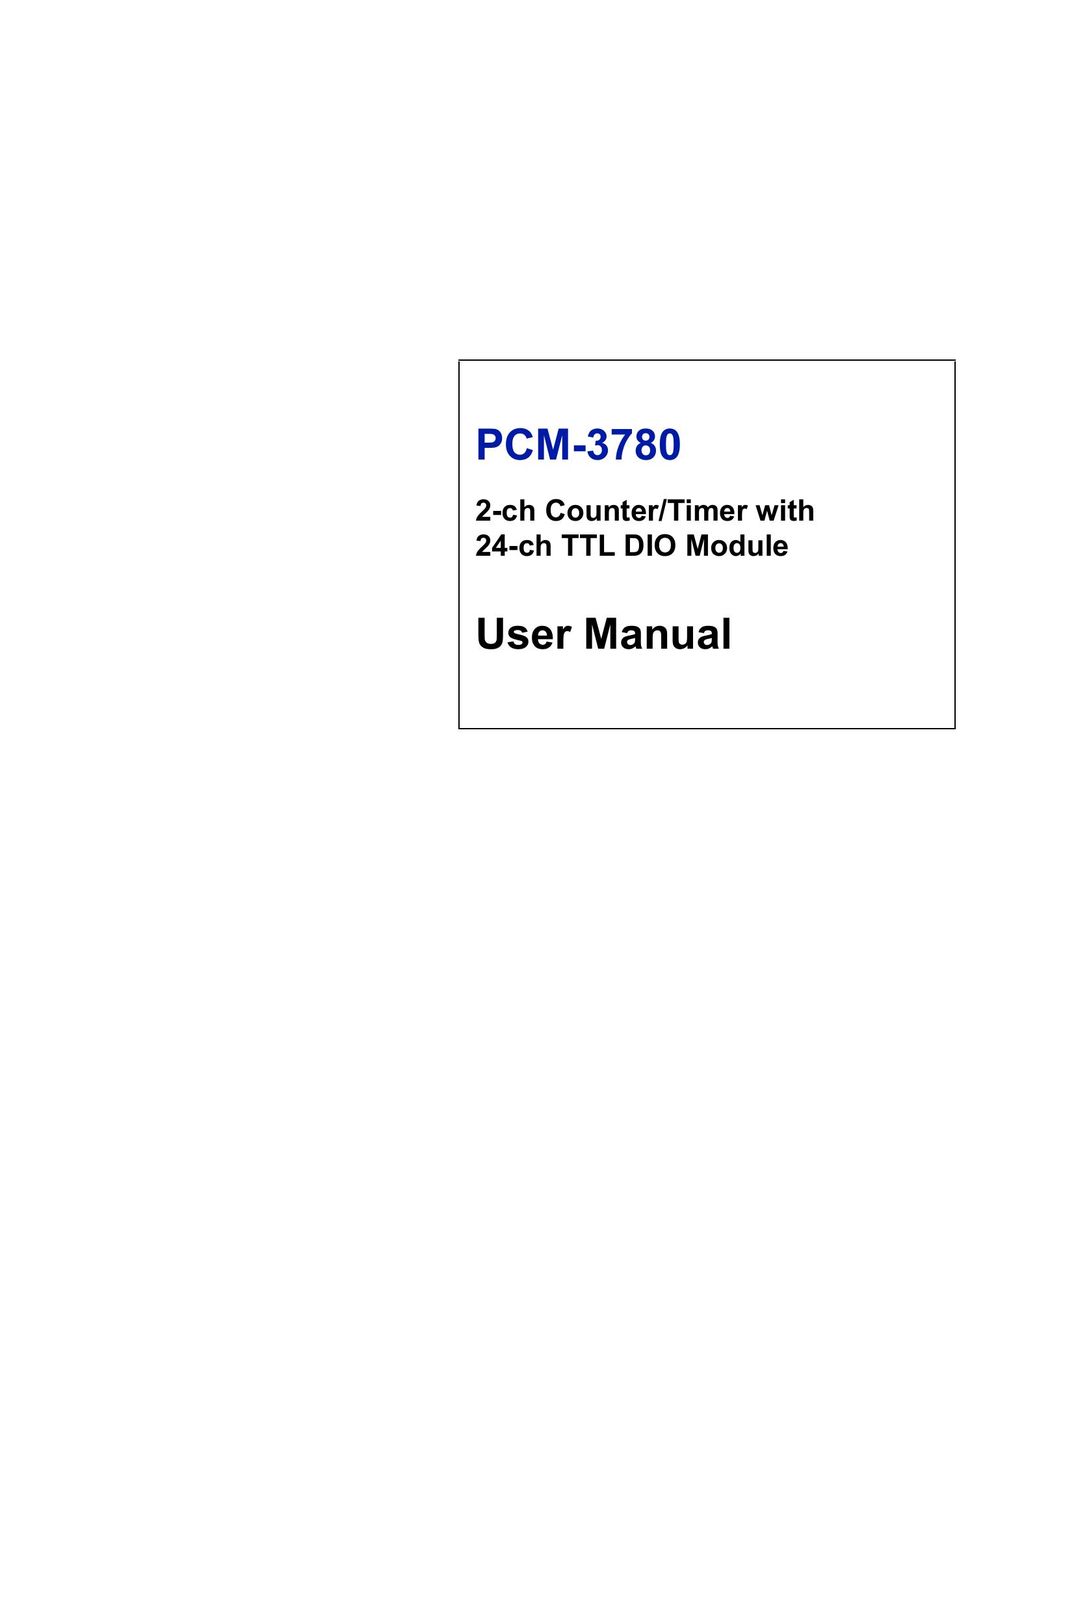 Advantech PCM-3780 TV Mount User Manual